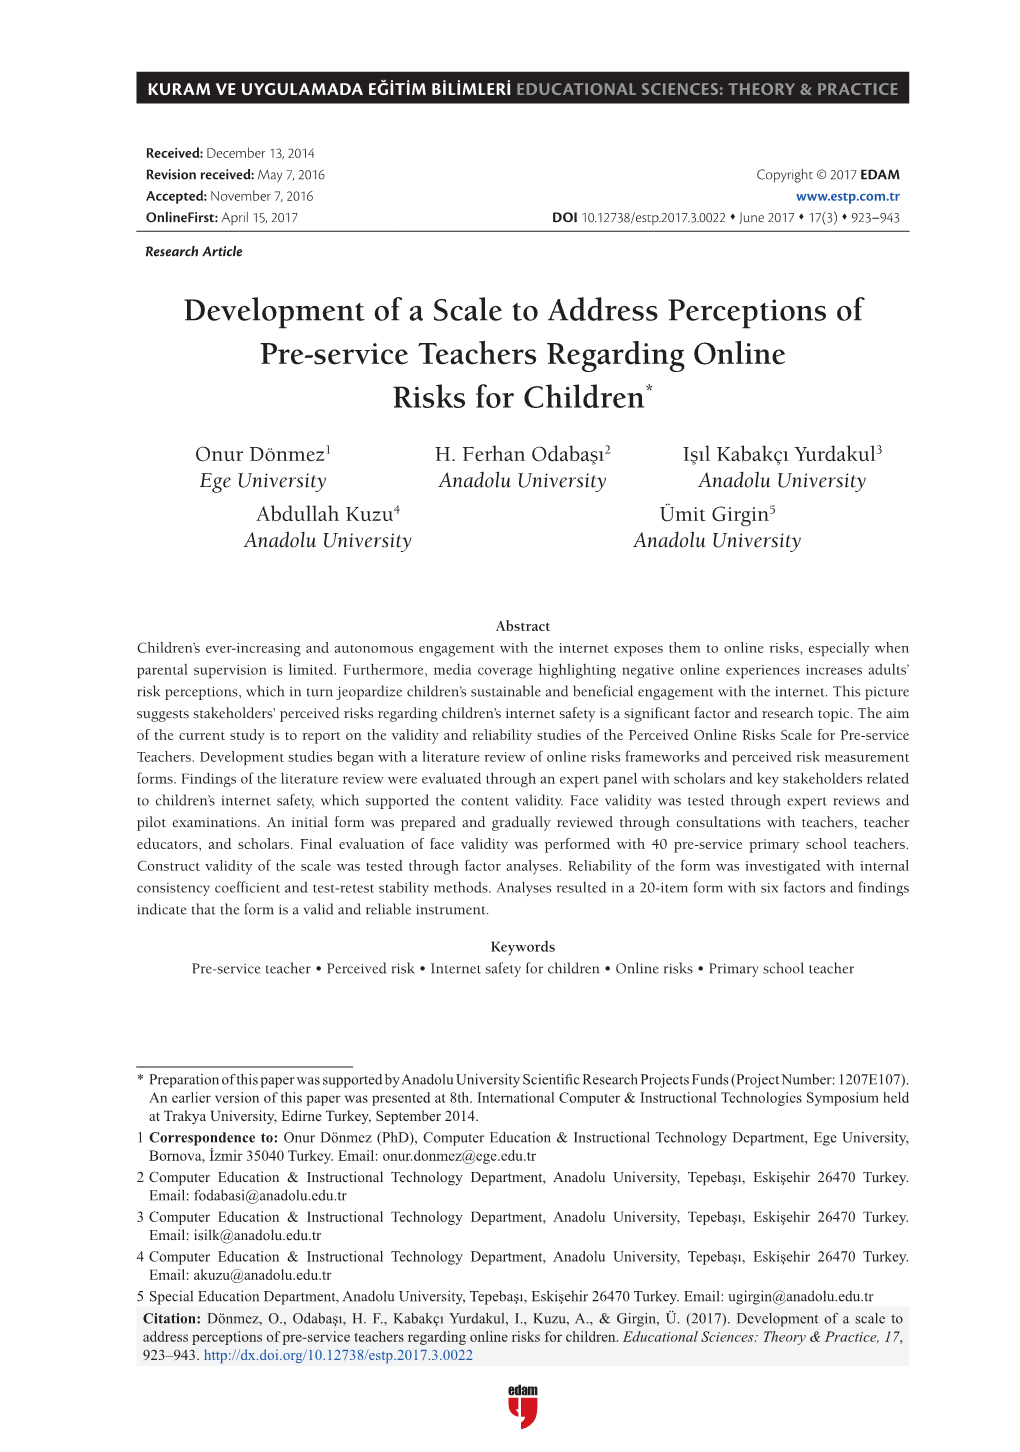 Development of a Scale to Address Perceptions of Pre-Service Teachers Regarding Online Risks for Children*